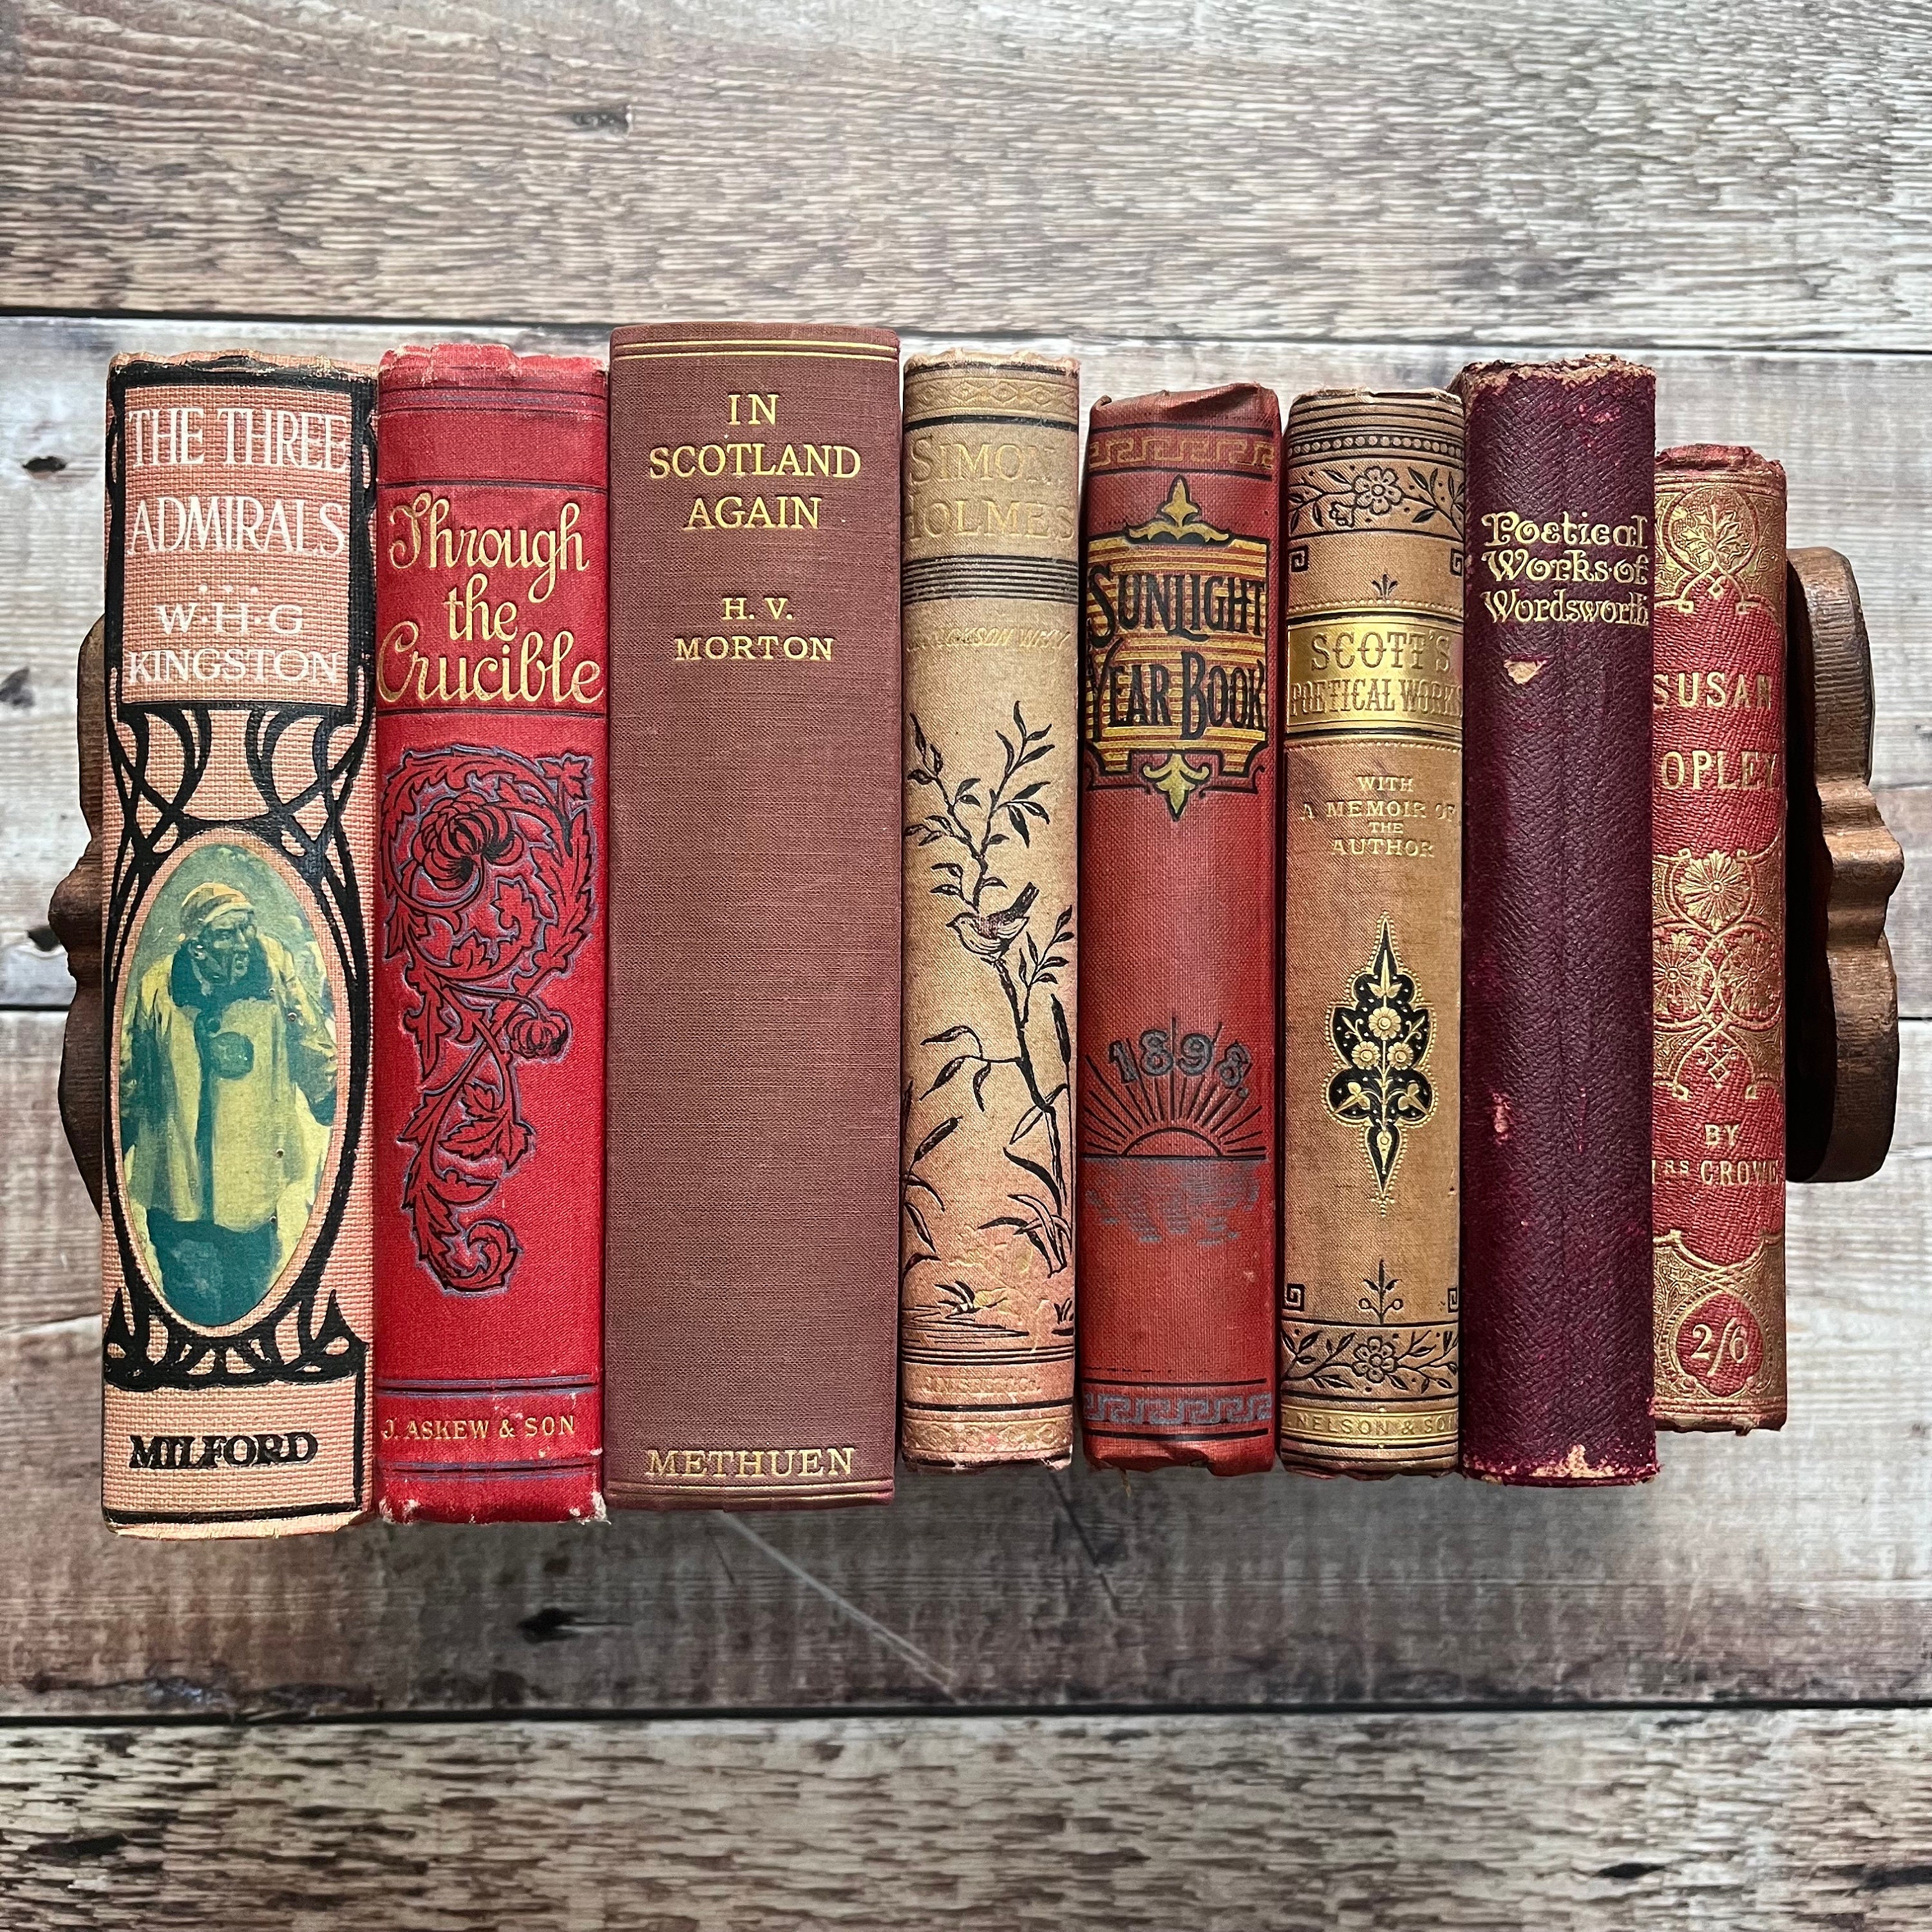 Adopt an Antique Book Worn Loved Hardback Books Vintage Book for